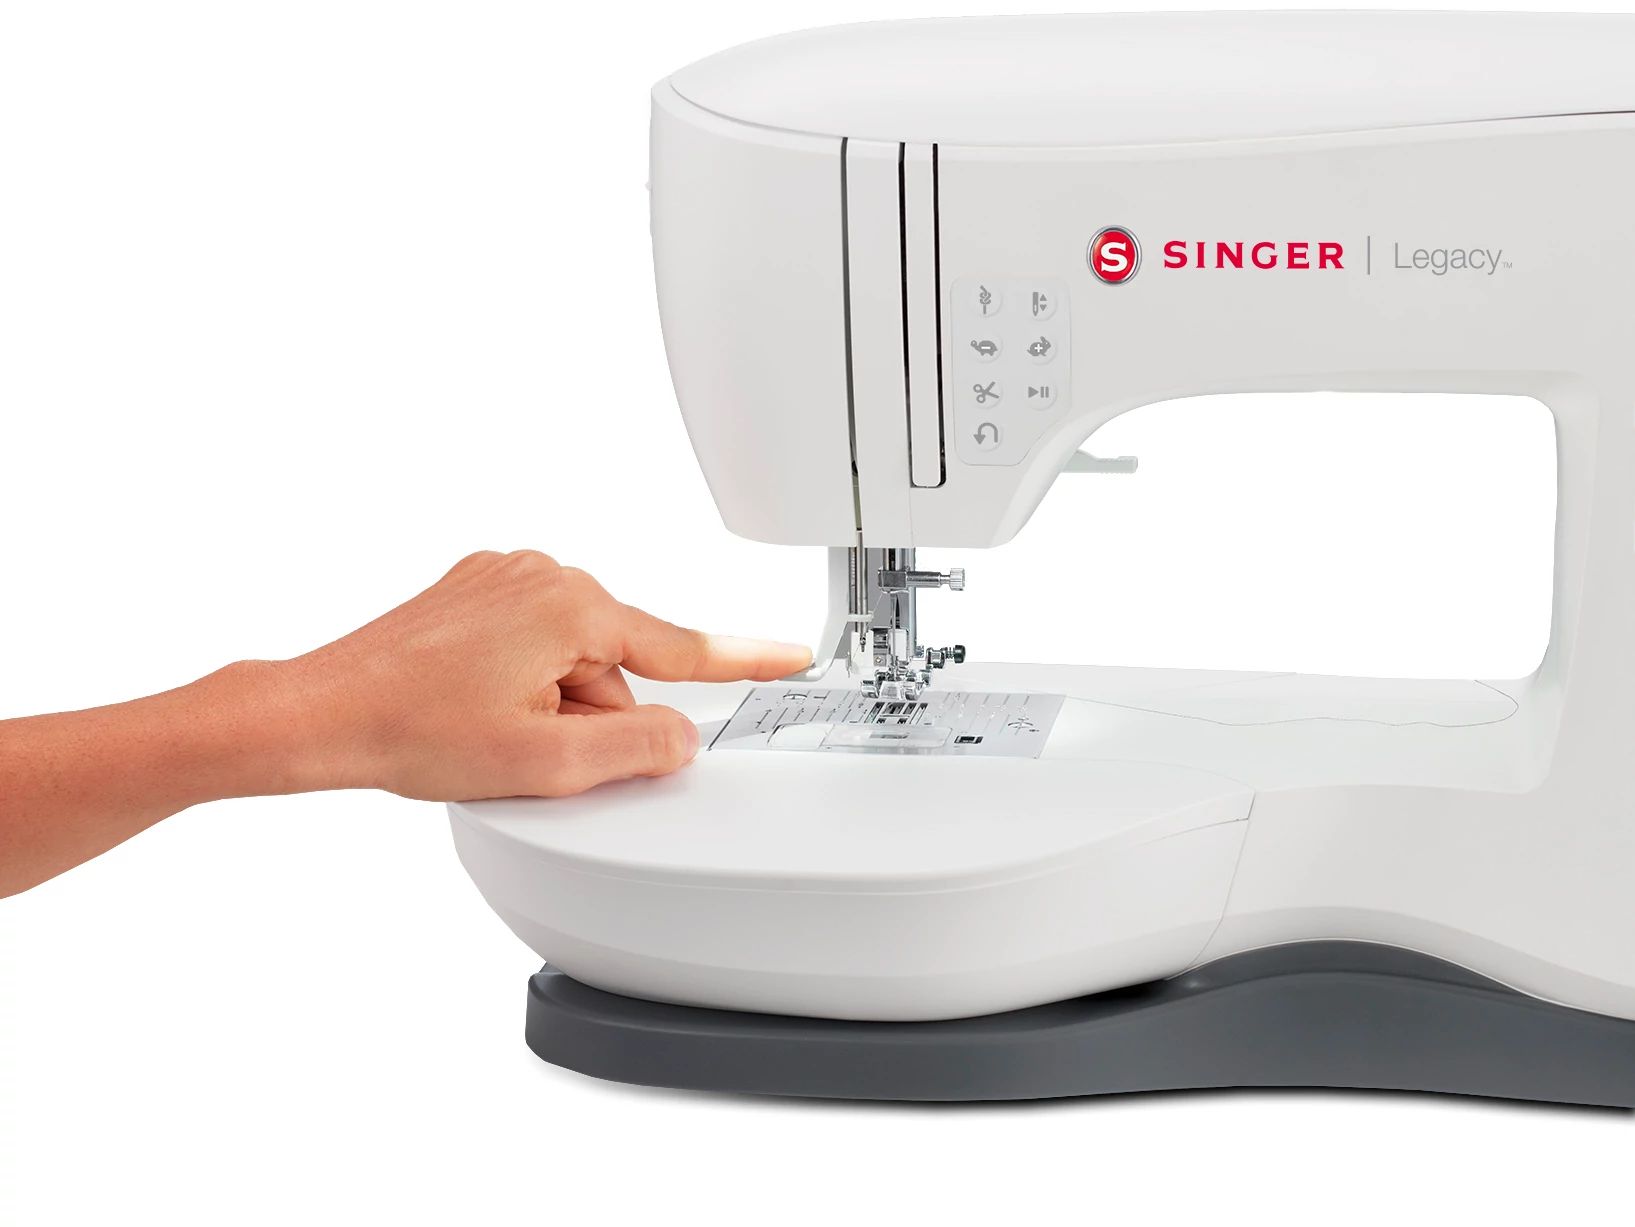 Legacy™ C440 Sewing Machine